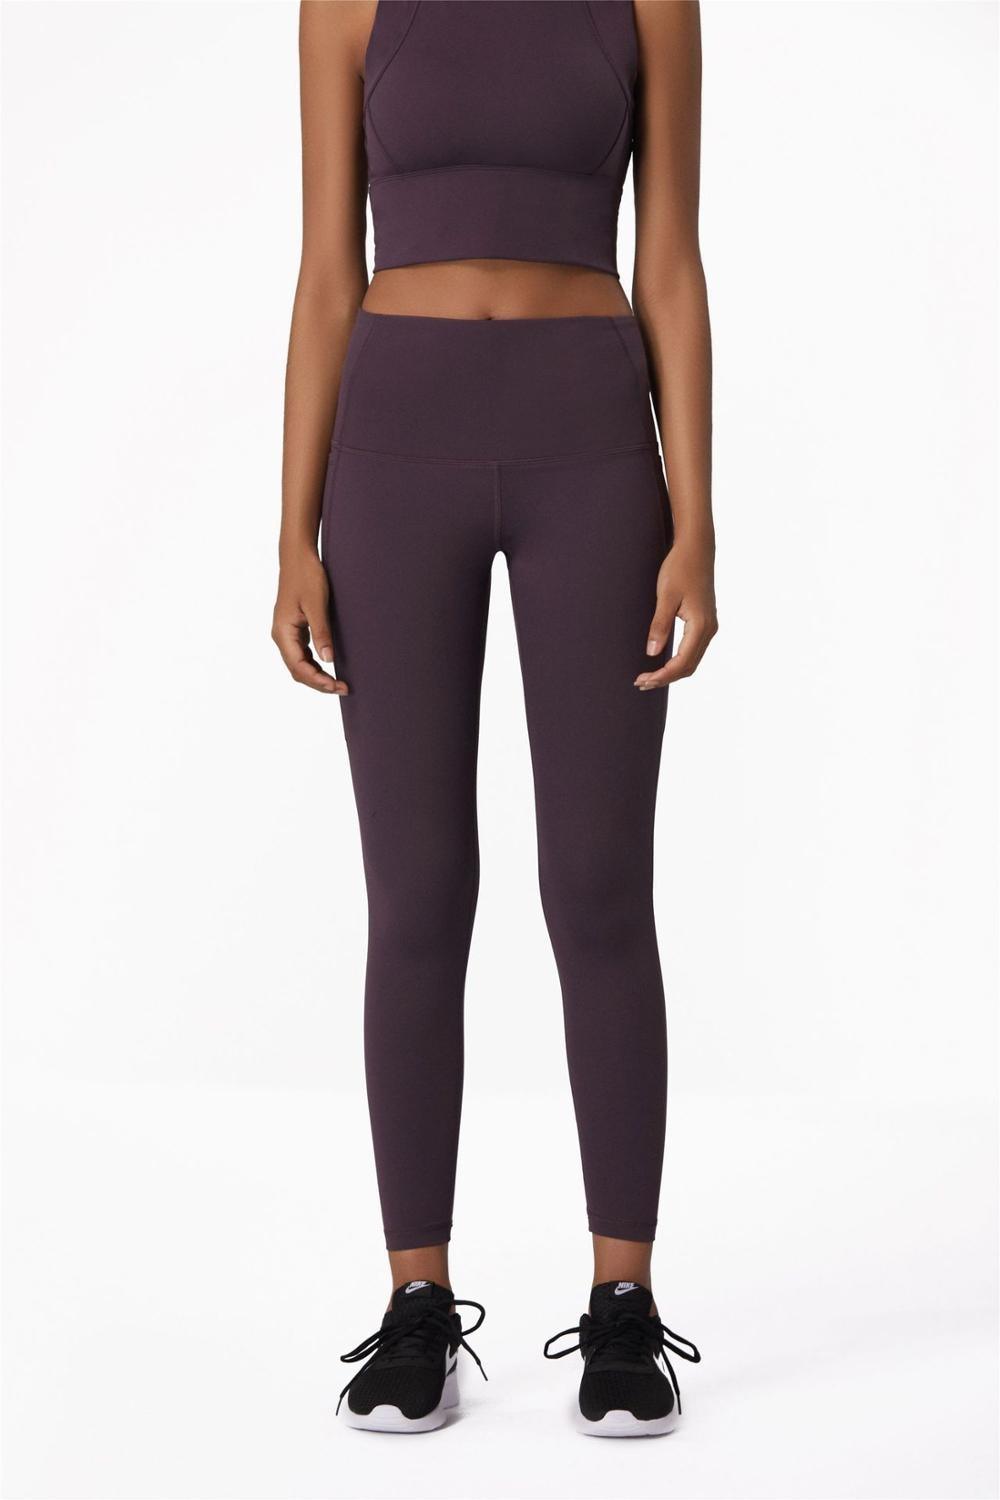 New Style Women Yoga Pants - Fitness Sports Pants - Compression Vital Seamless Leggings Women's Sports Pants (BAP)(TBL)